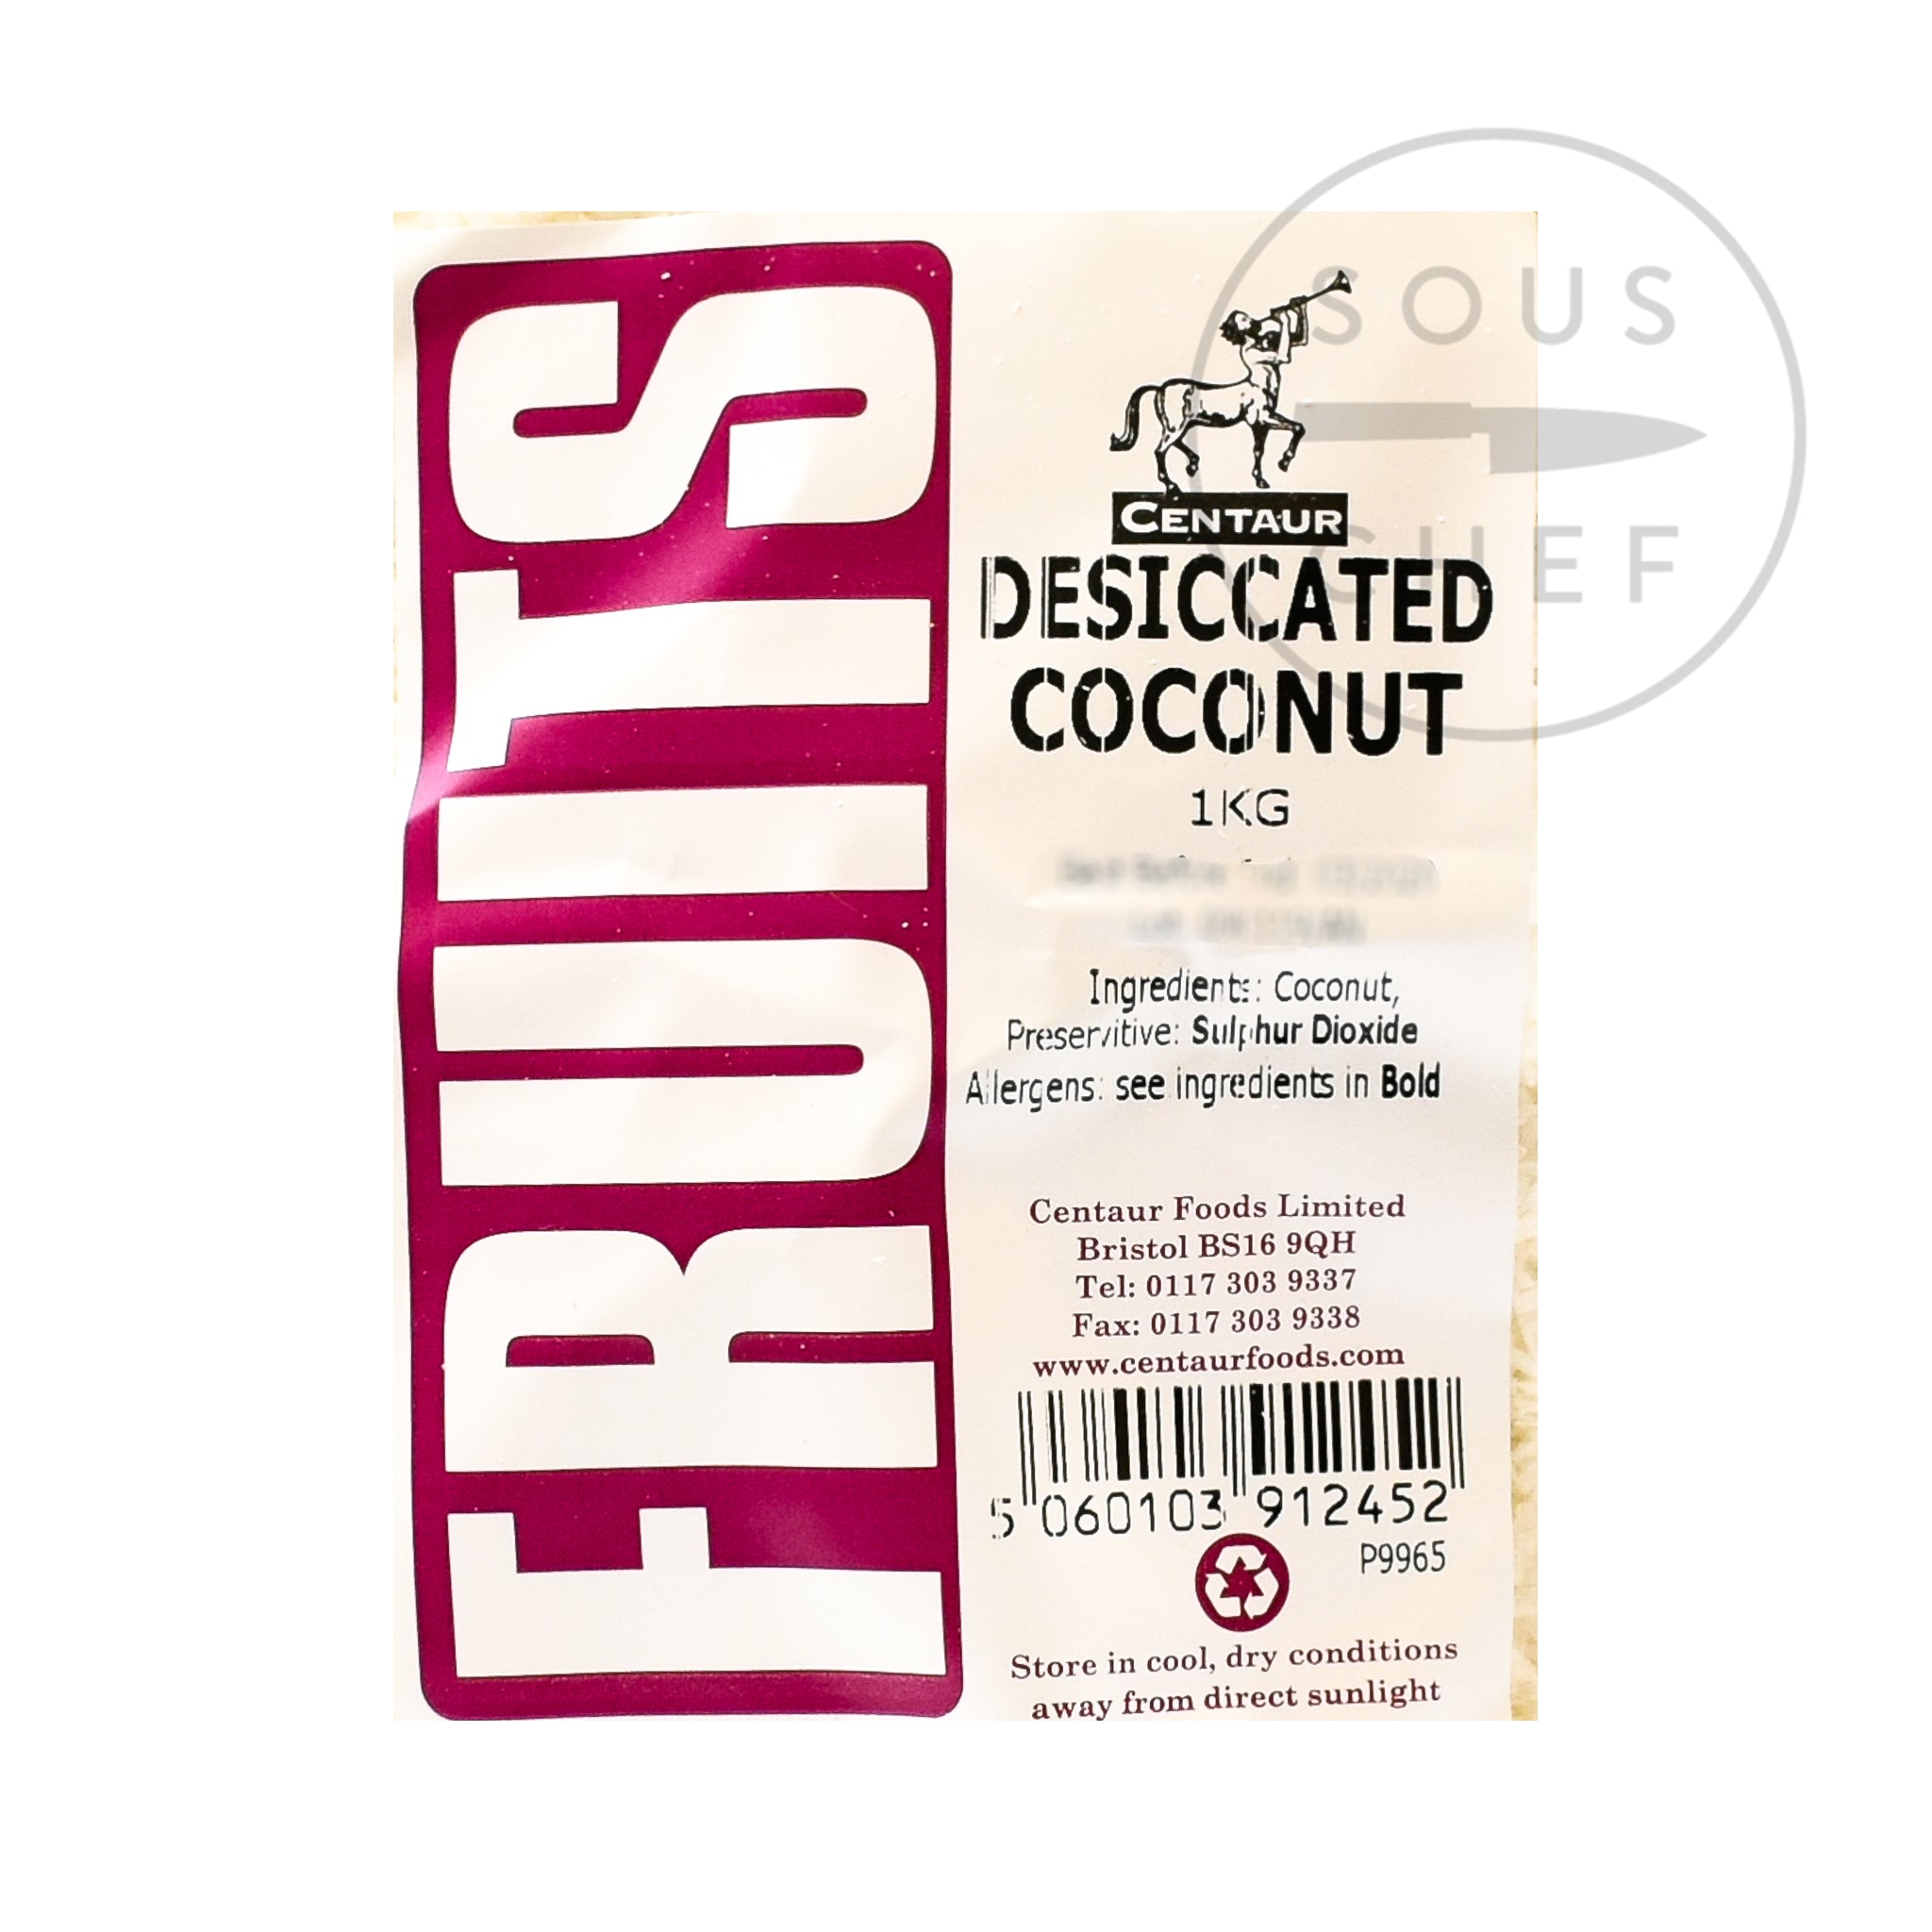 Desiccated Coconut 1kg ingredients